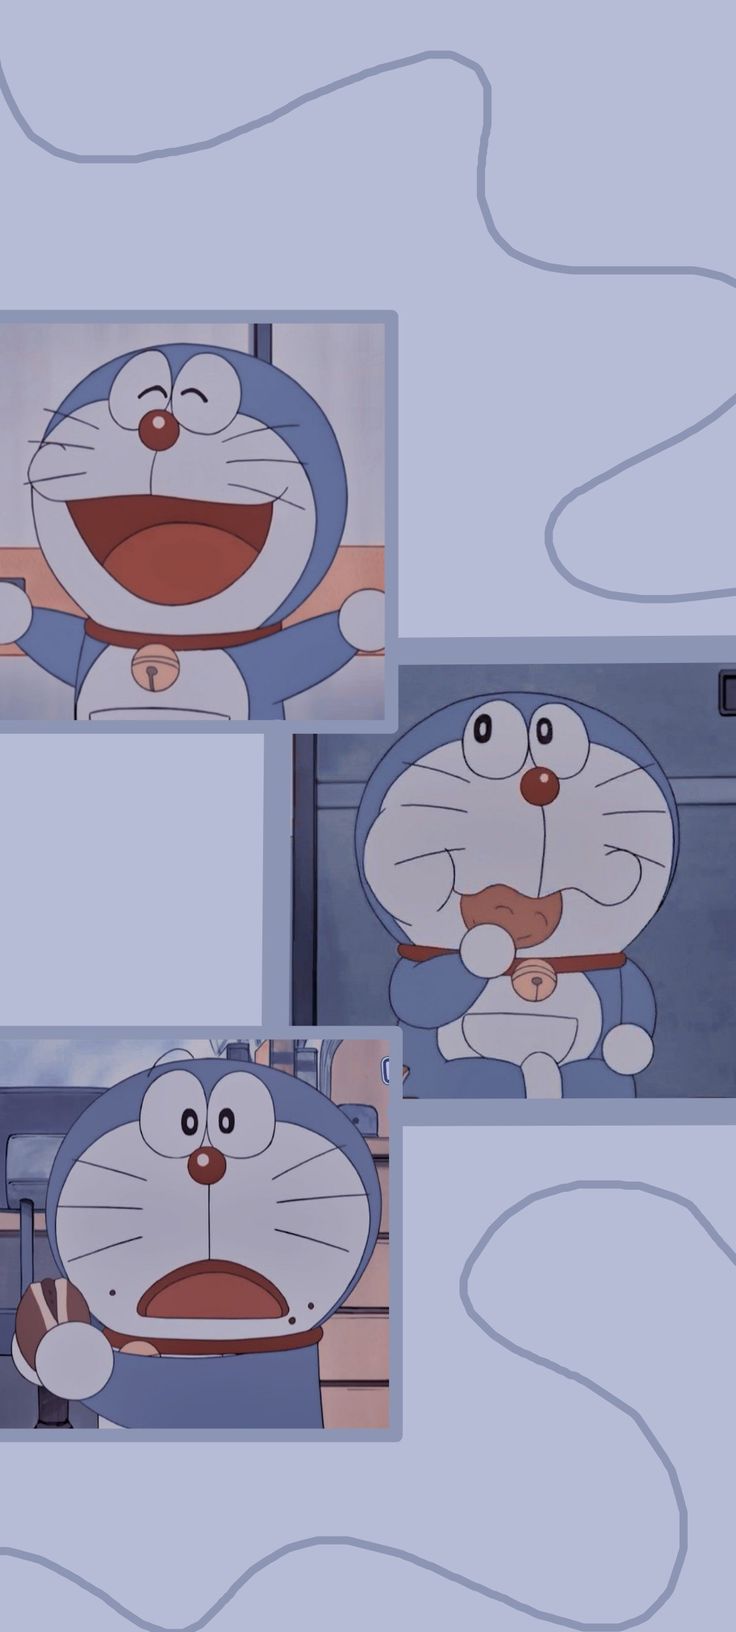 Doraemon wallpaper. Doraemon wallpaper, Cute wallpaper, Cute cats photo